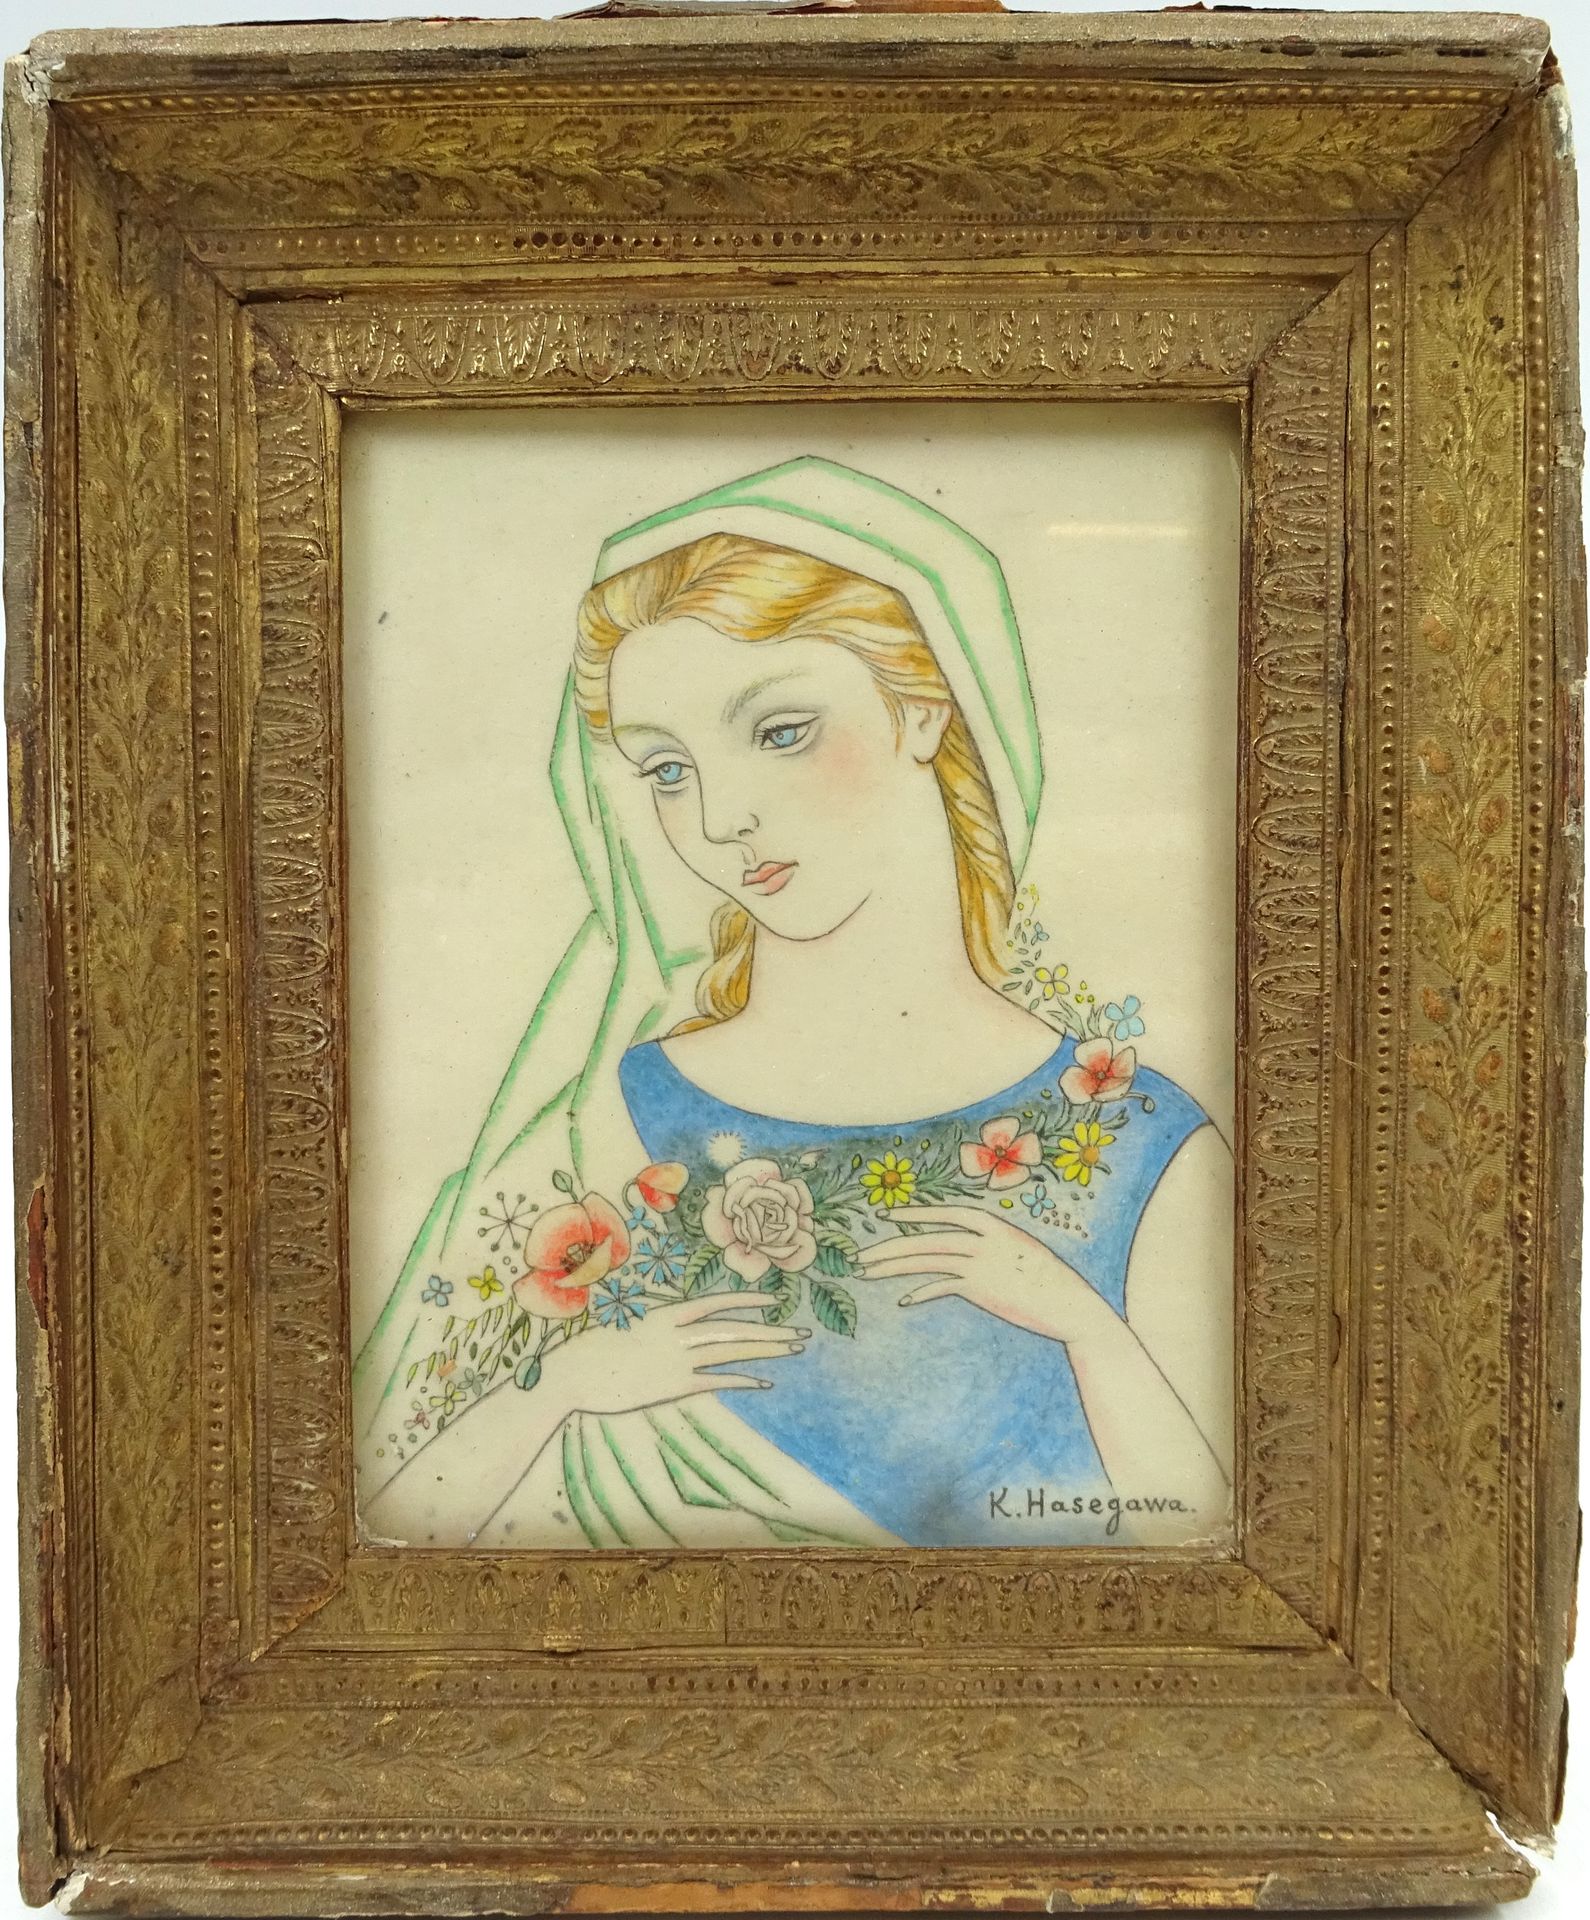 Null 长谷川清（1891-1980 年）。年轻女子与花的肖像。纸上水墨和水粉画。右下方有签名。背面注明日期：1950 年。置于玻璃下。